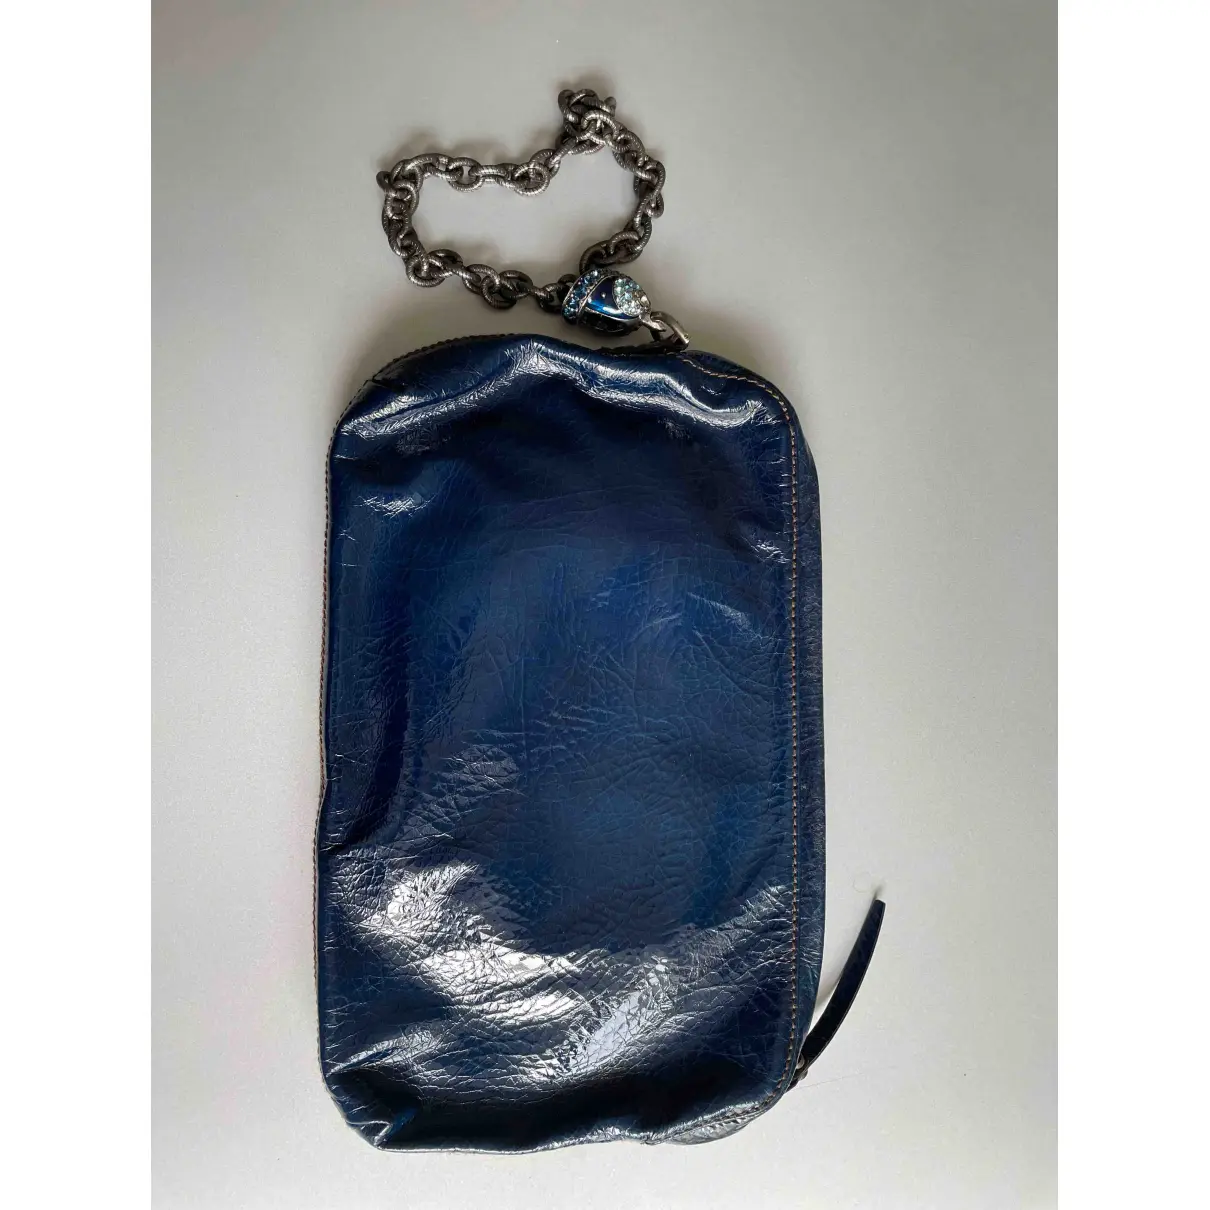 Buy Lanvin Patent leather clutch bag online